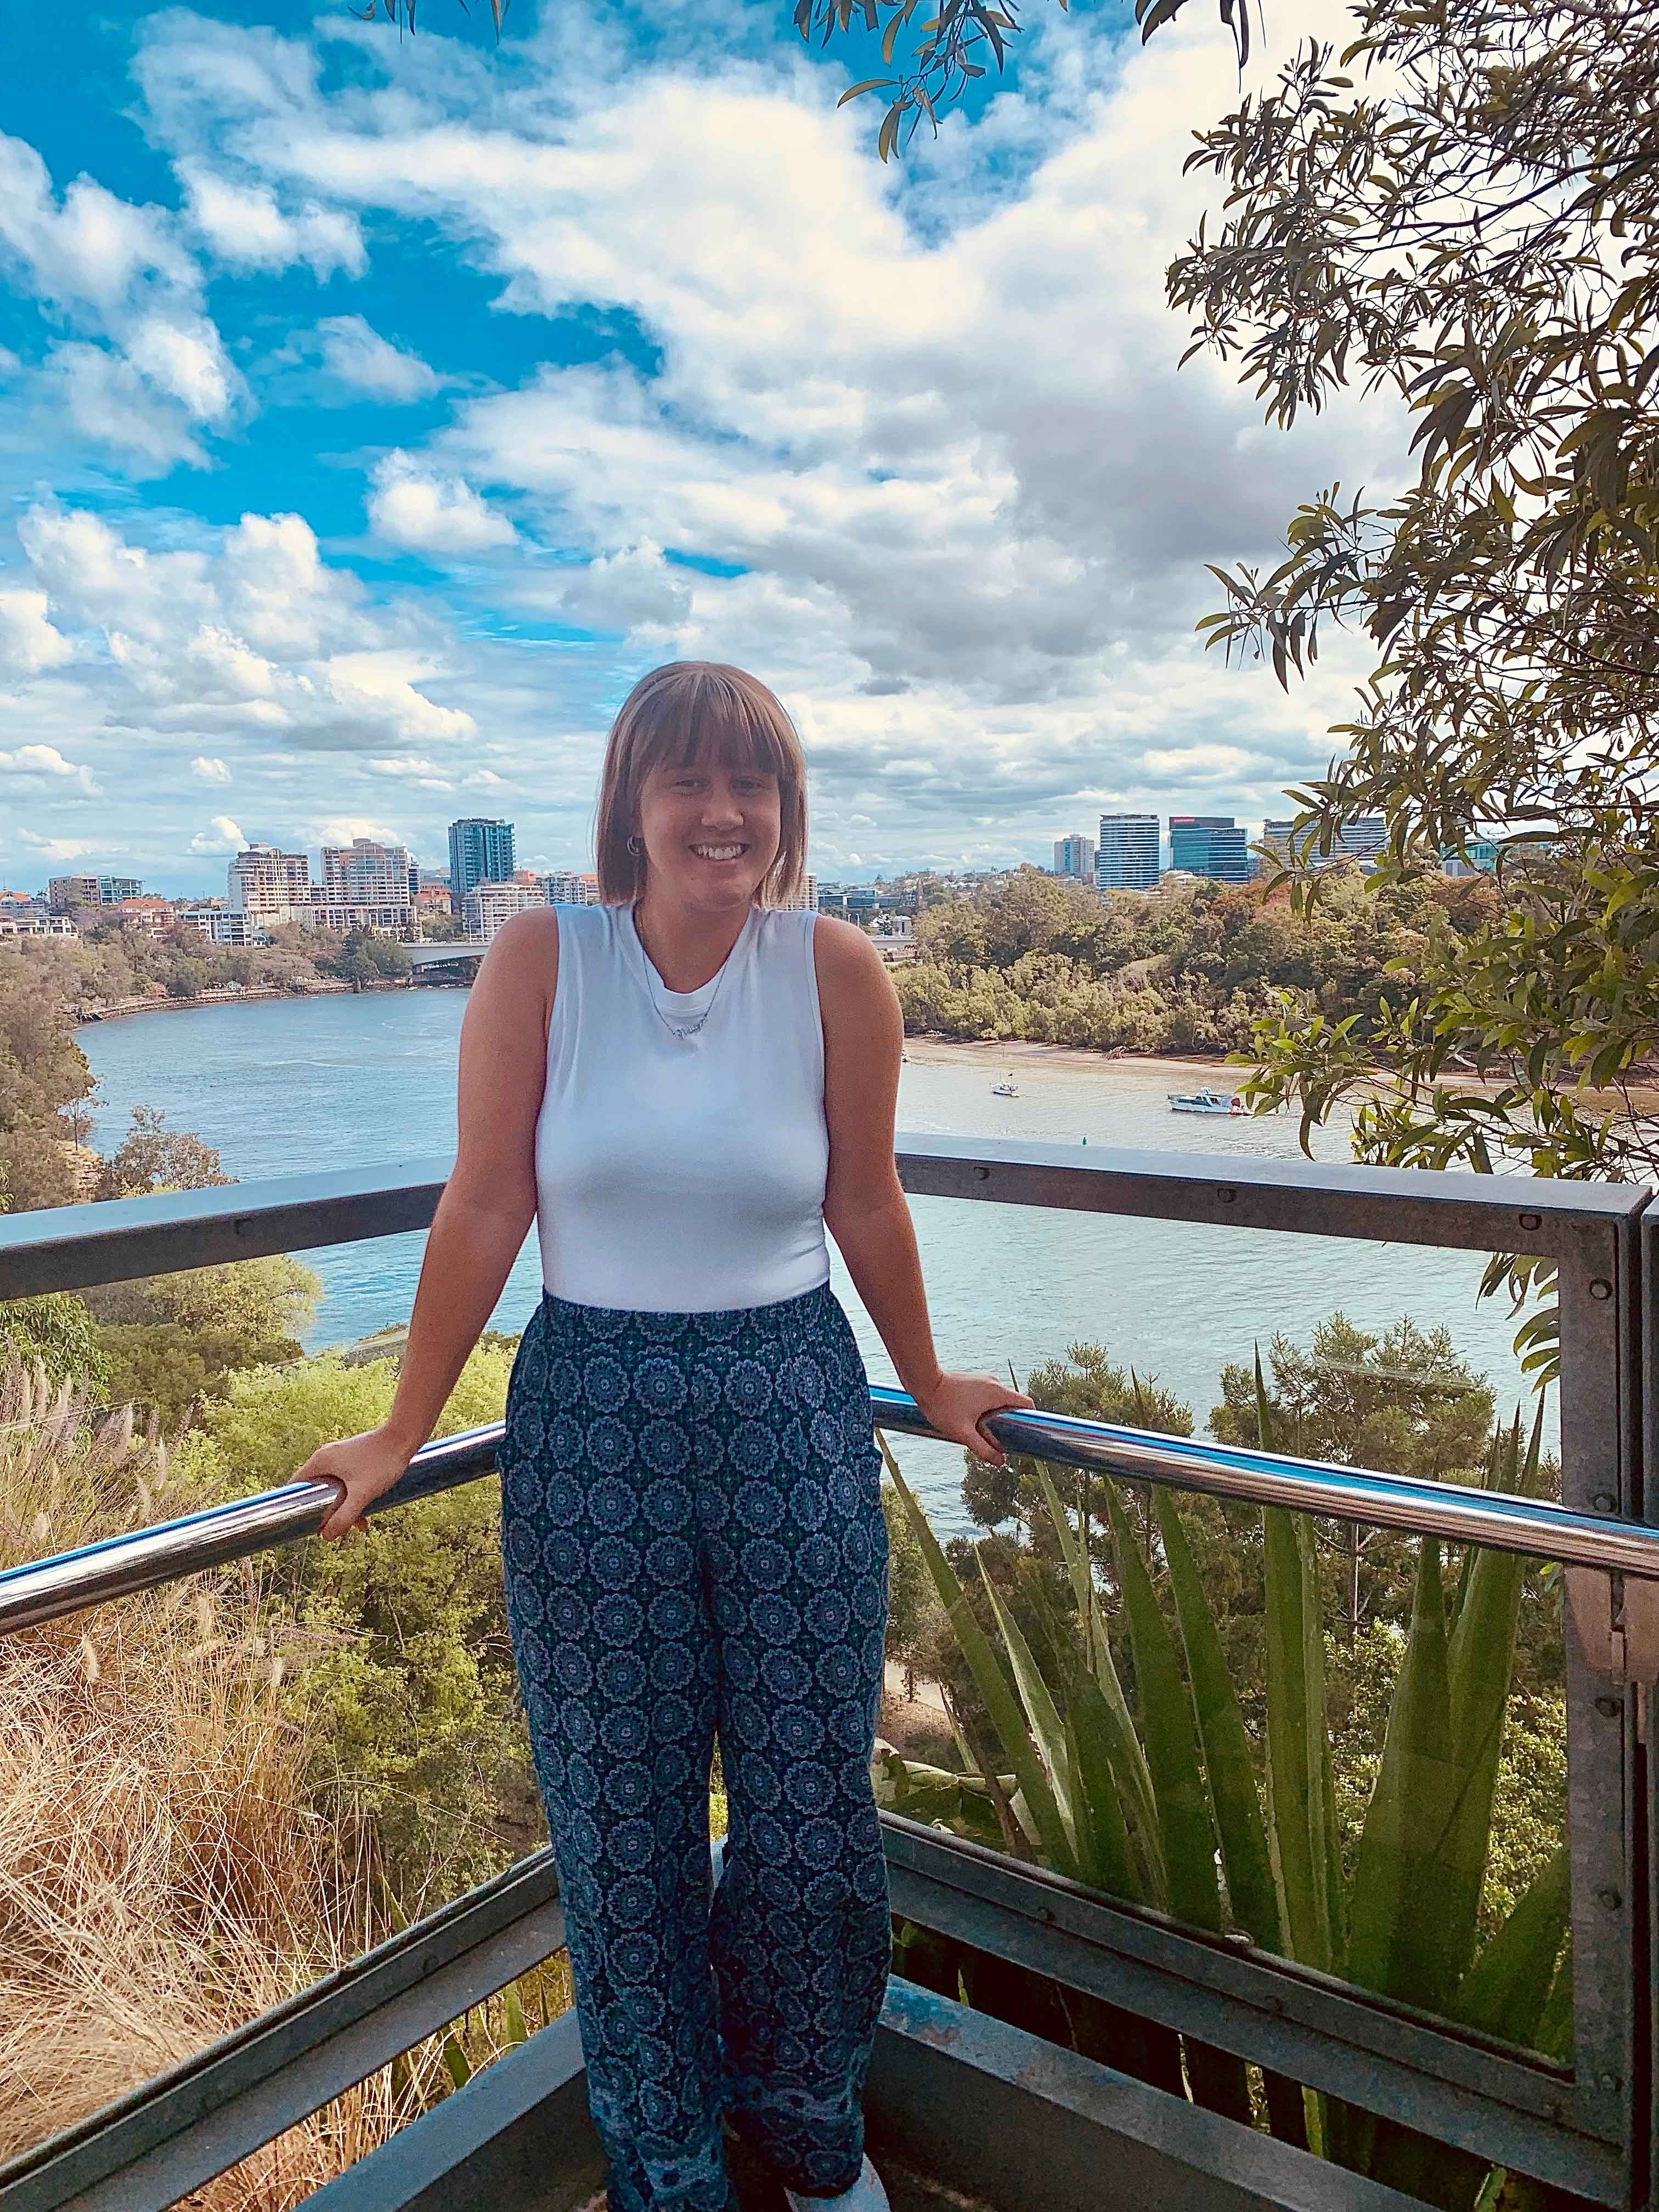 Student smiling in front of Brisbane River in Australia